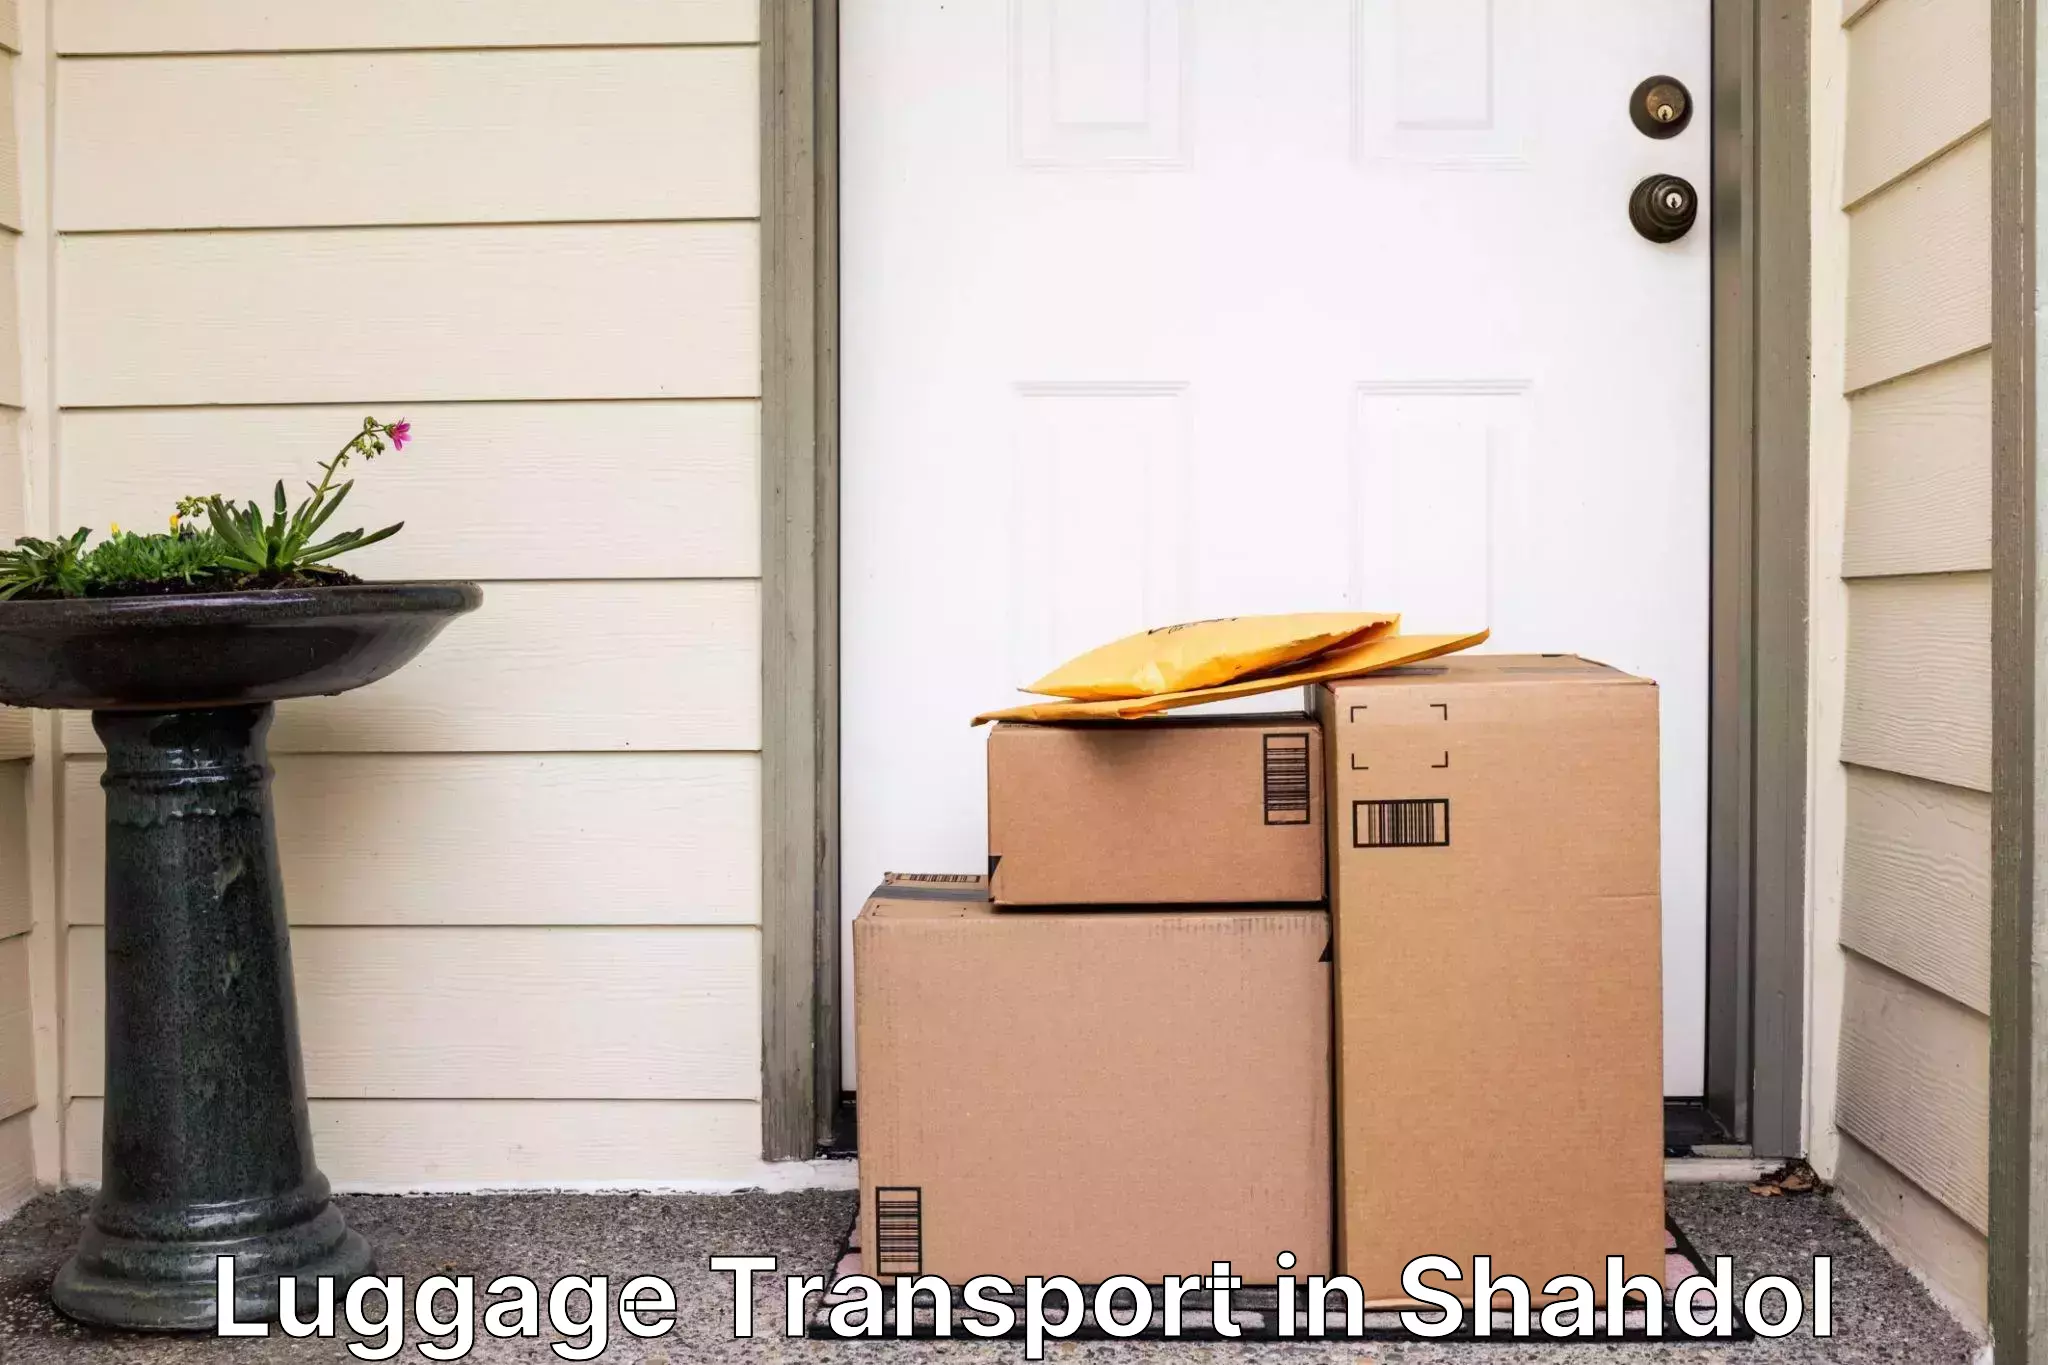 Multi-destination luggage transport in Shahdol